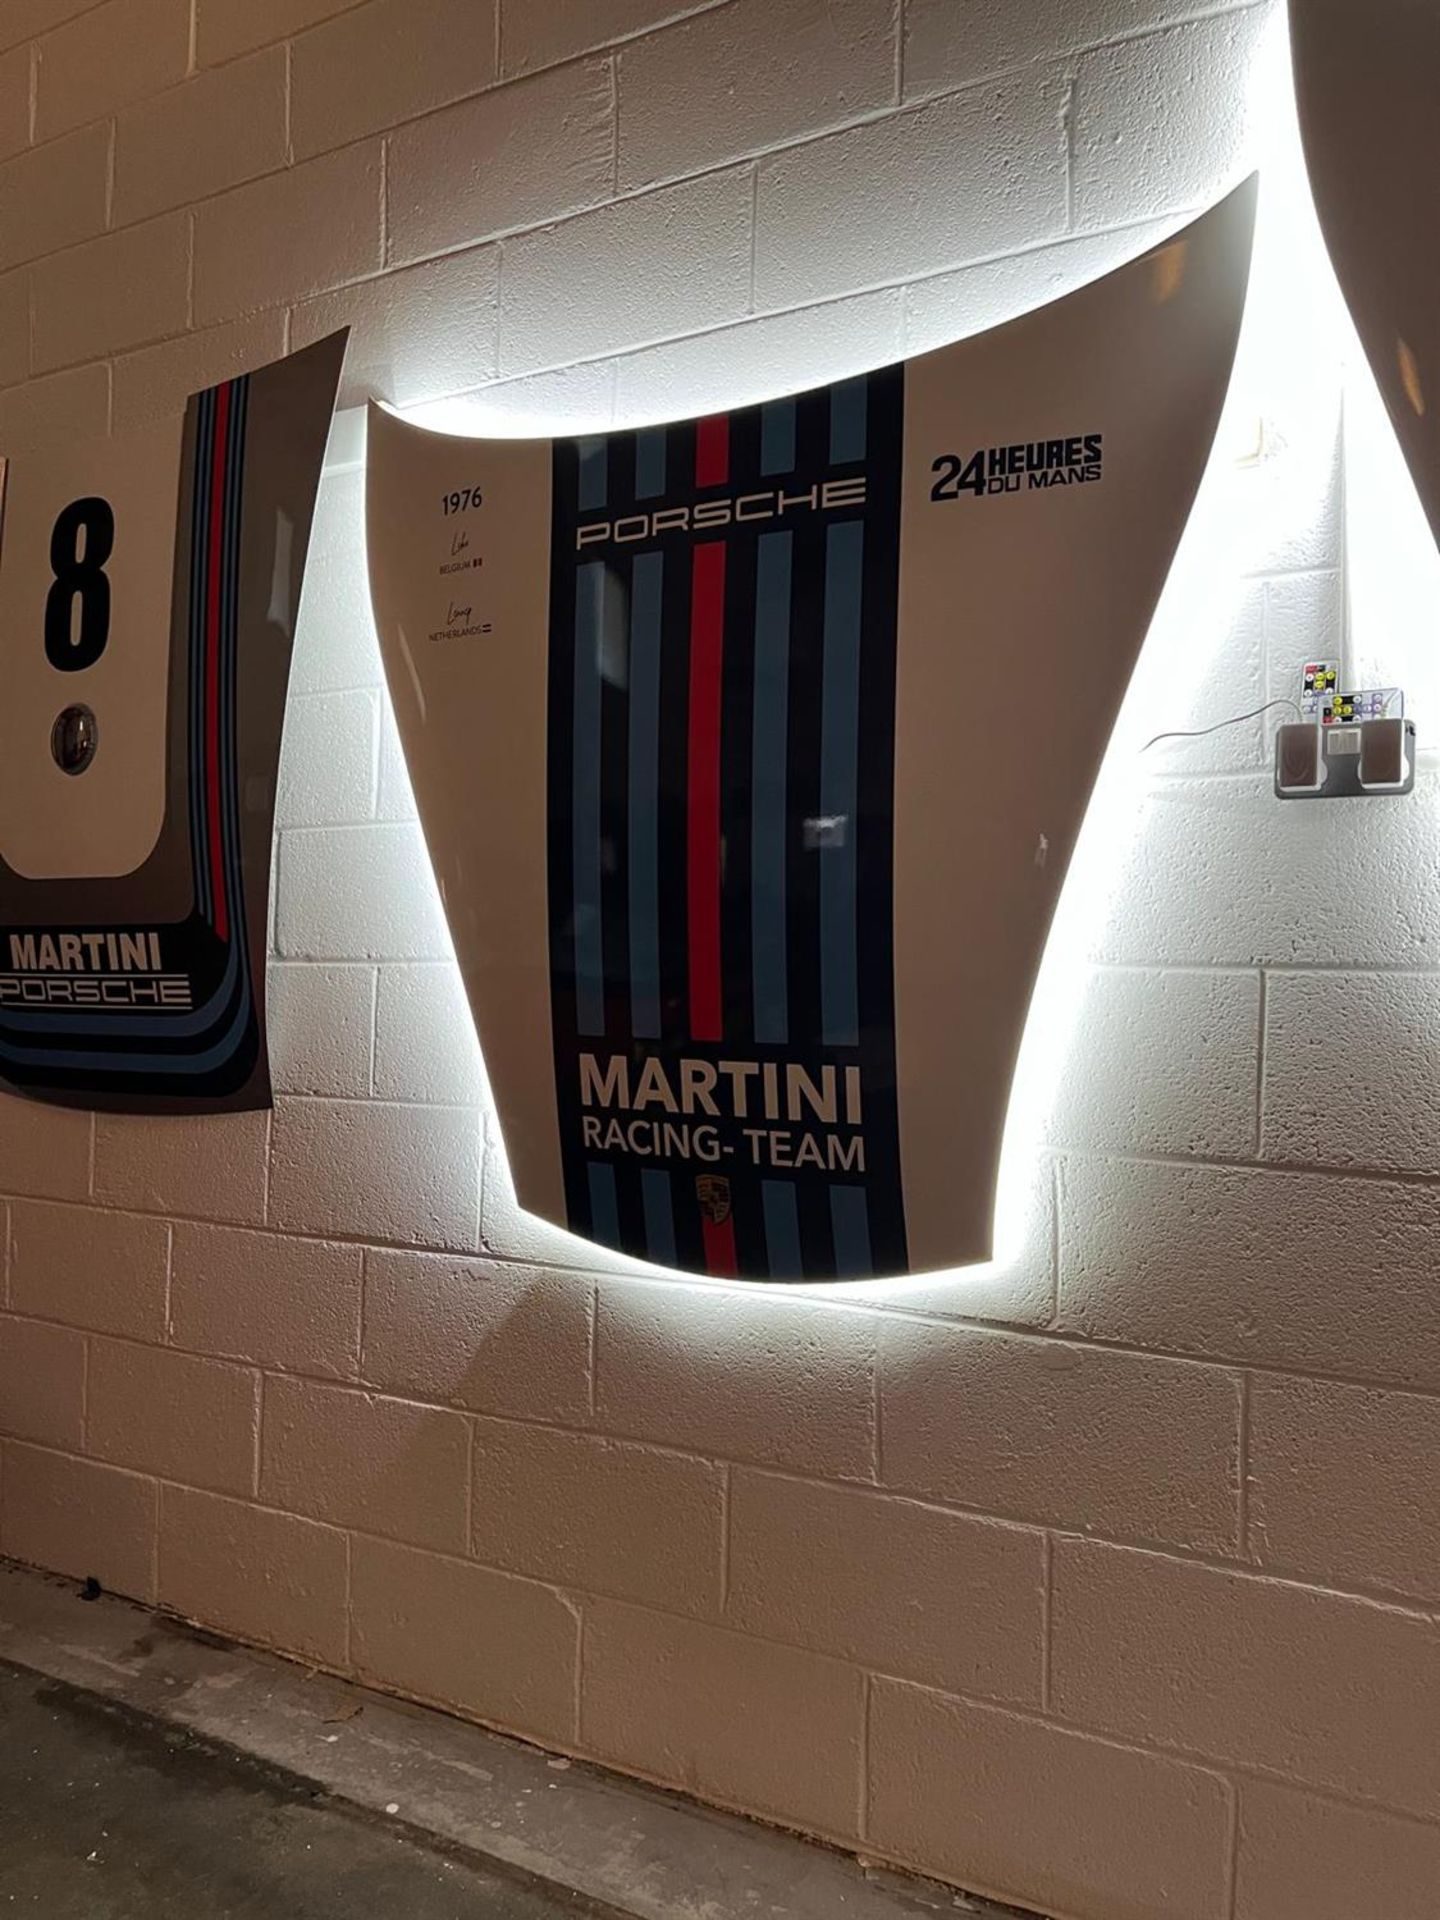 Martini Racing-Liveried Original Porsche 911 Bonnet Backlit Wall Display - Image 2 of 5